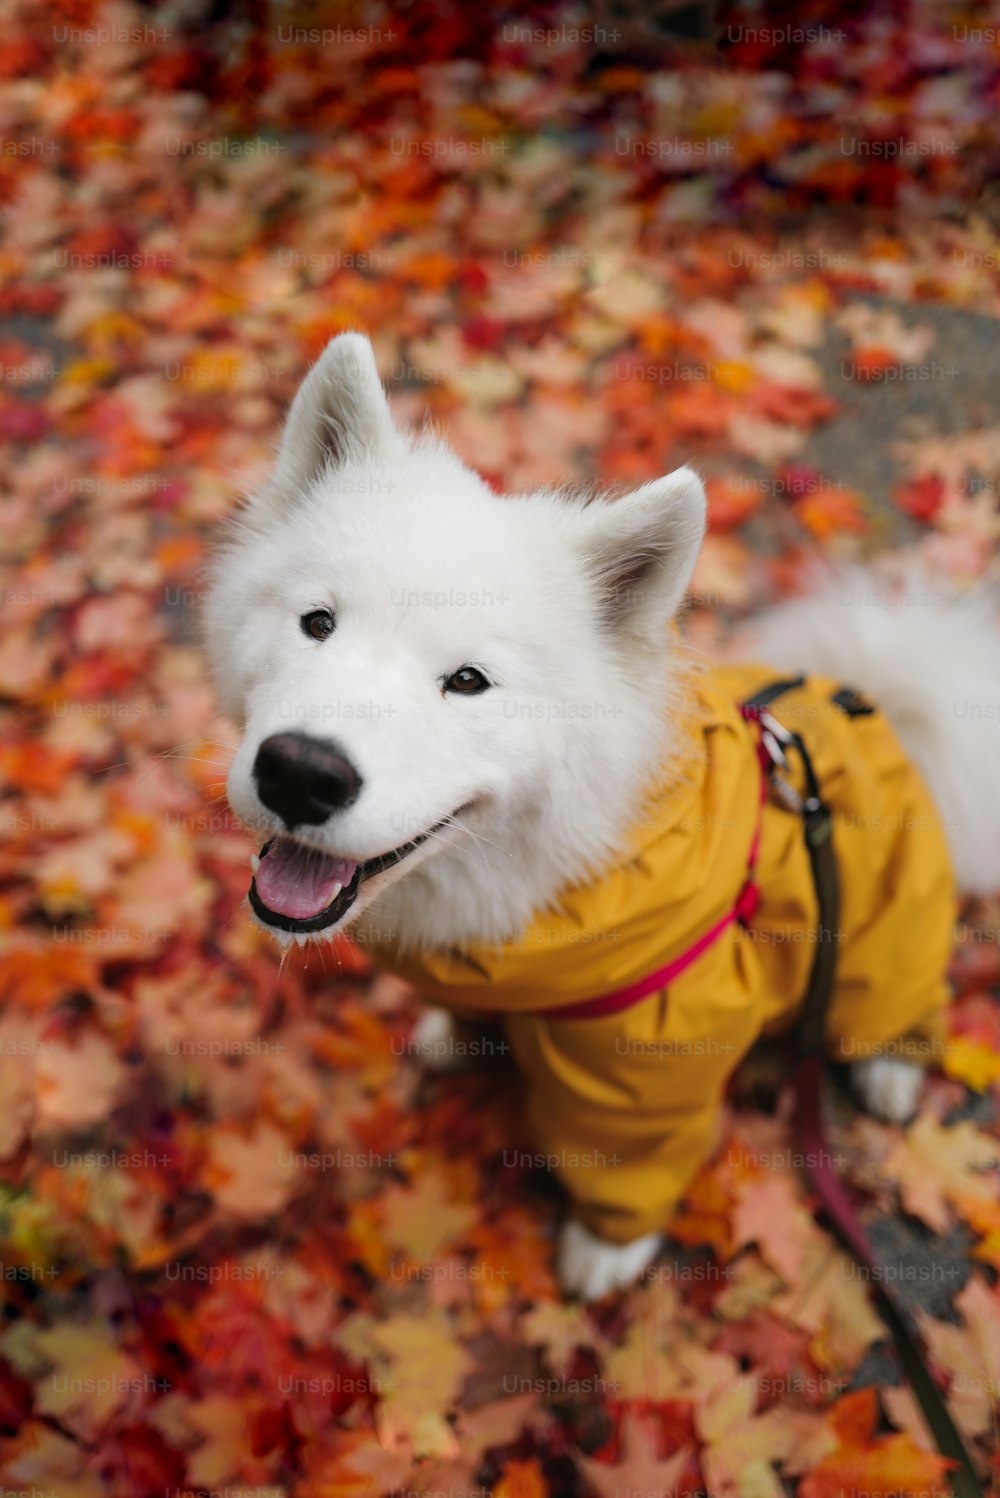 a small white dog wearing a yellow jacket